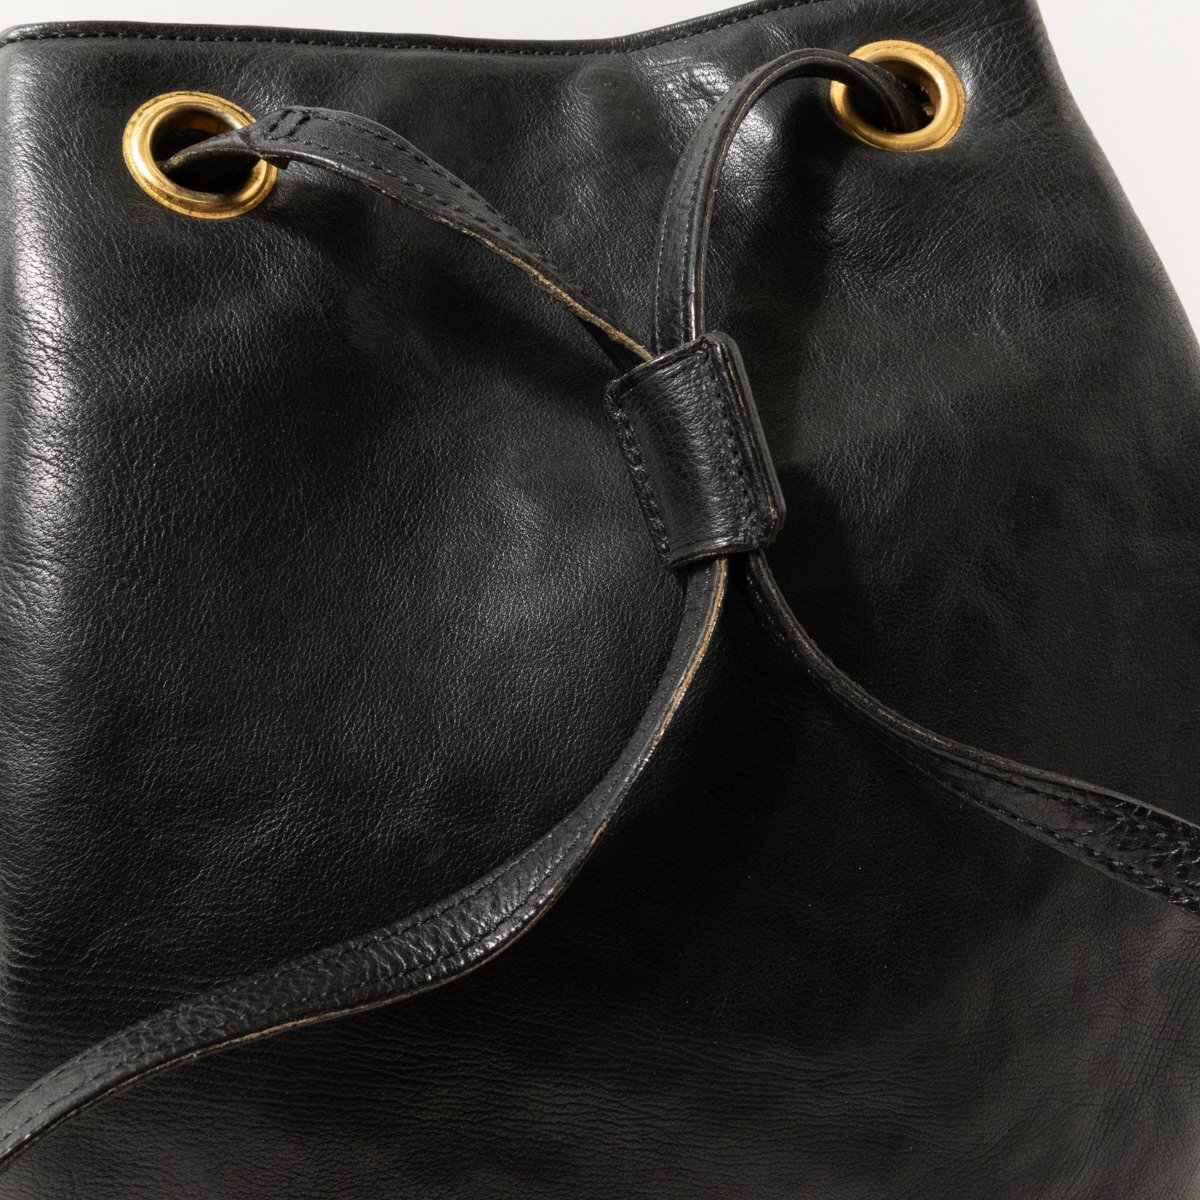 POLLINI poly- -ni rucksack black black Gold all leather original leather lady's retro simple casual high capacity bag bag bag 